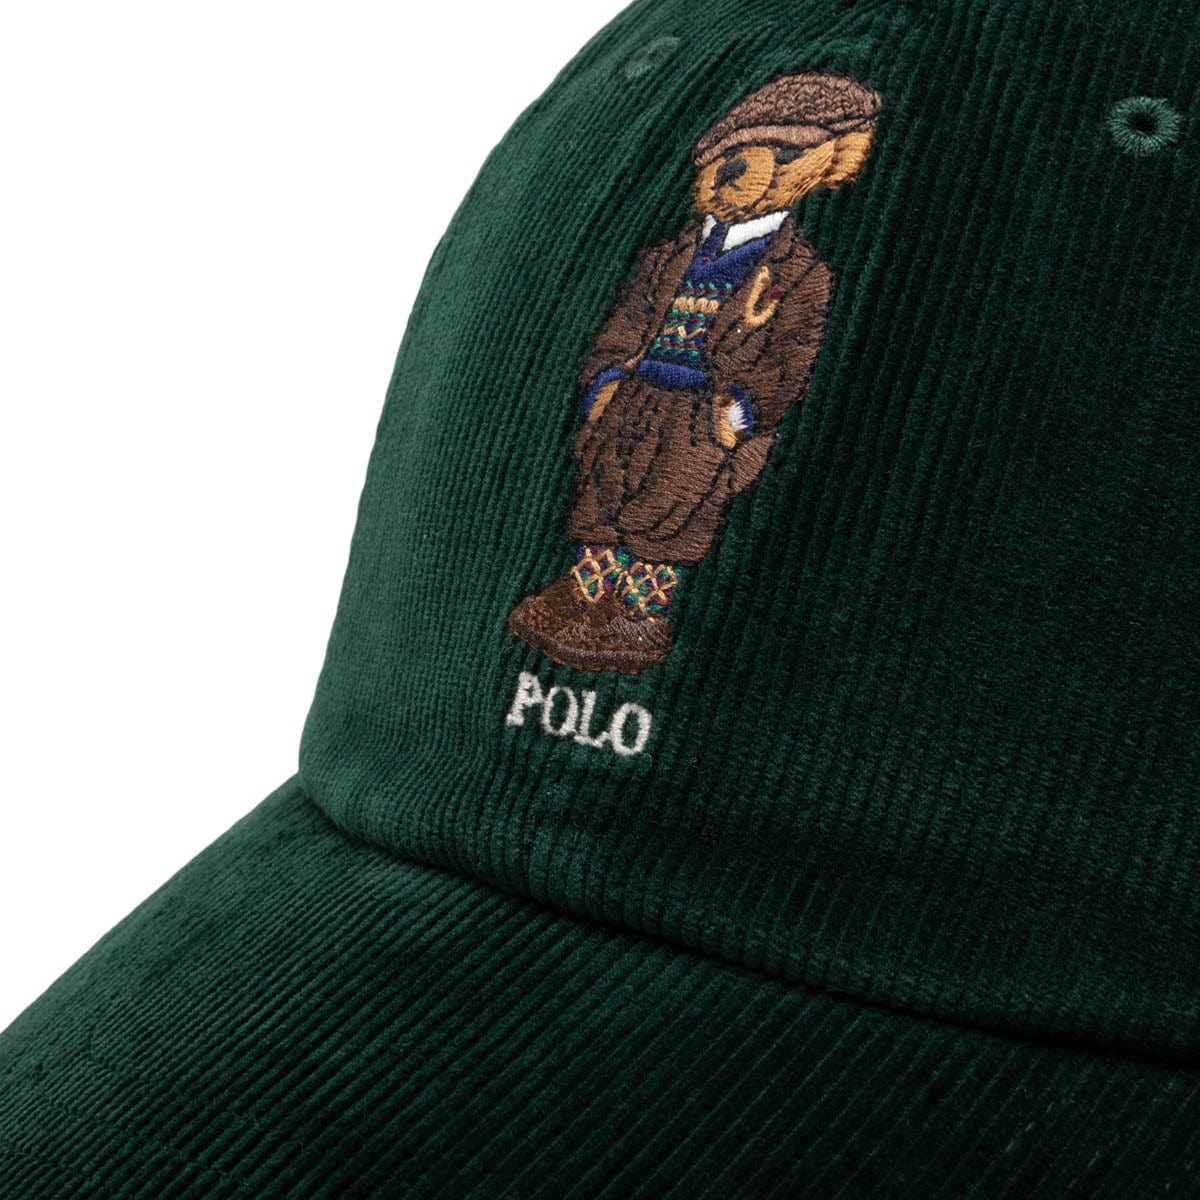 Polo Ralph Lauren Headwear COLLEGE GREEN / O/S CORDUROY CLASSIC SPORT CAP